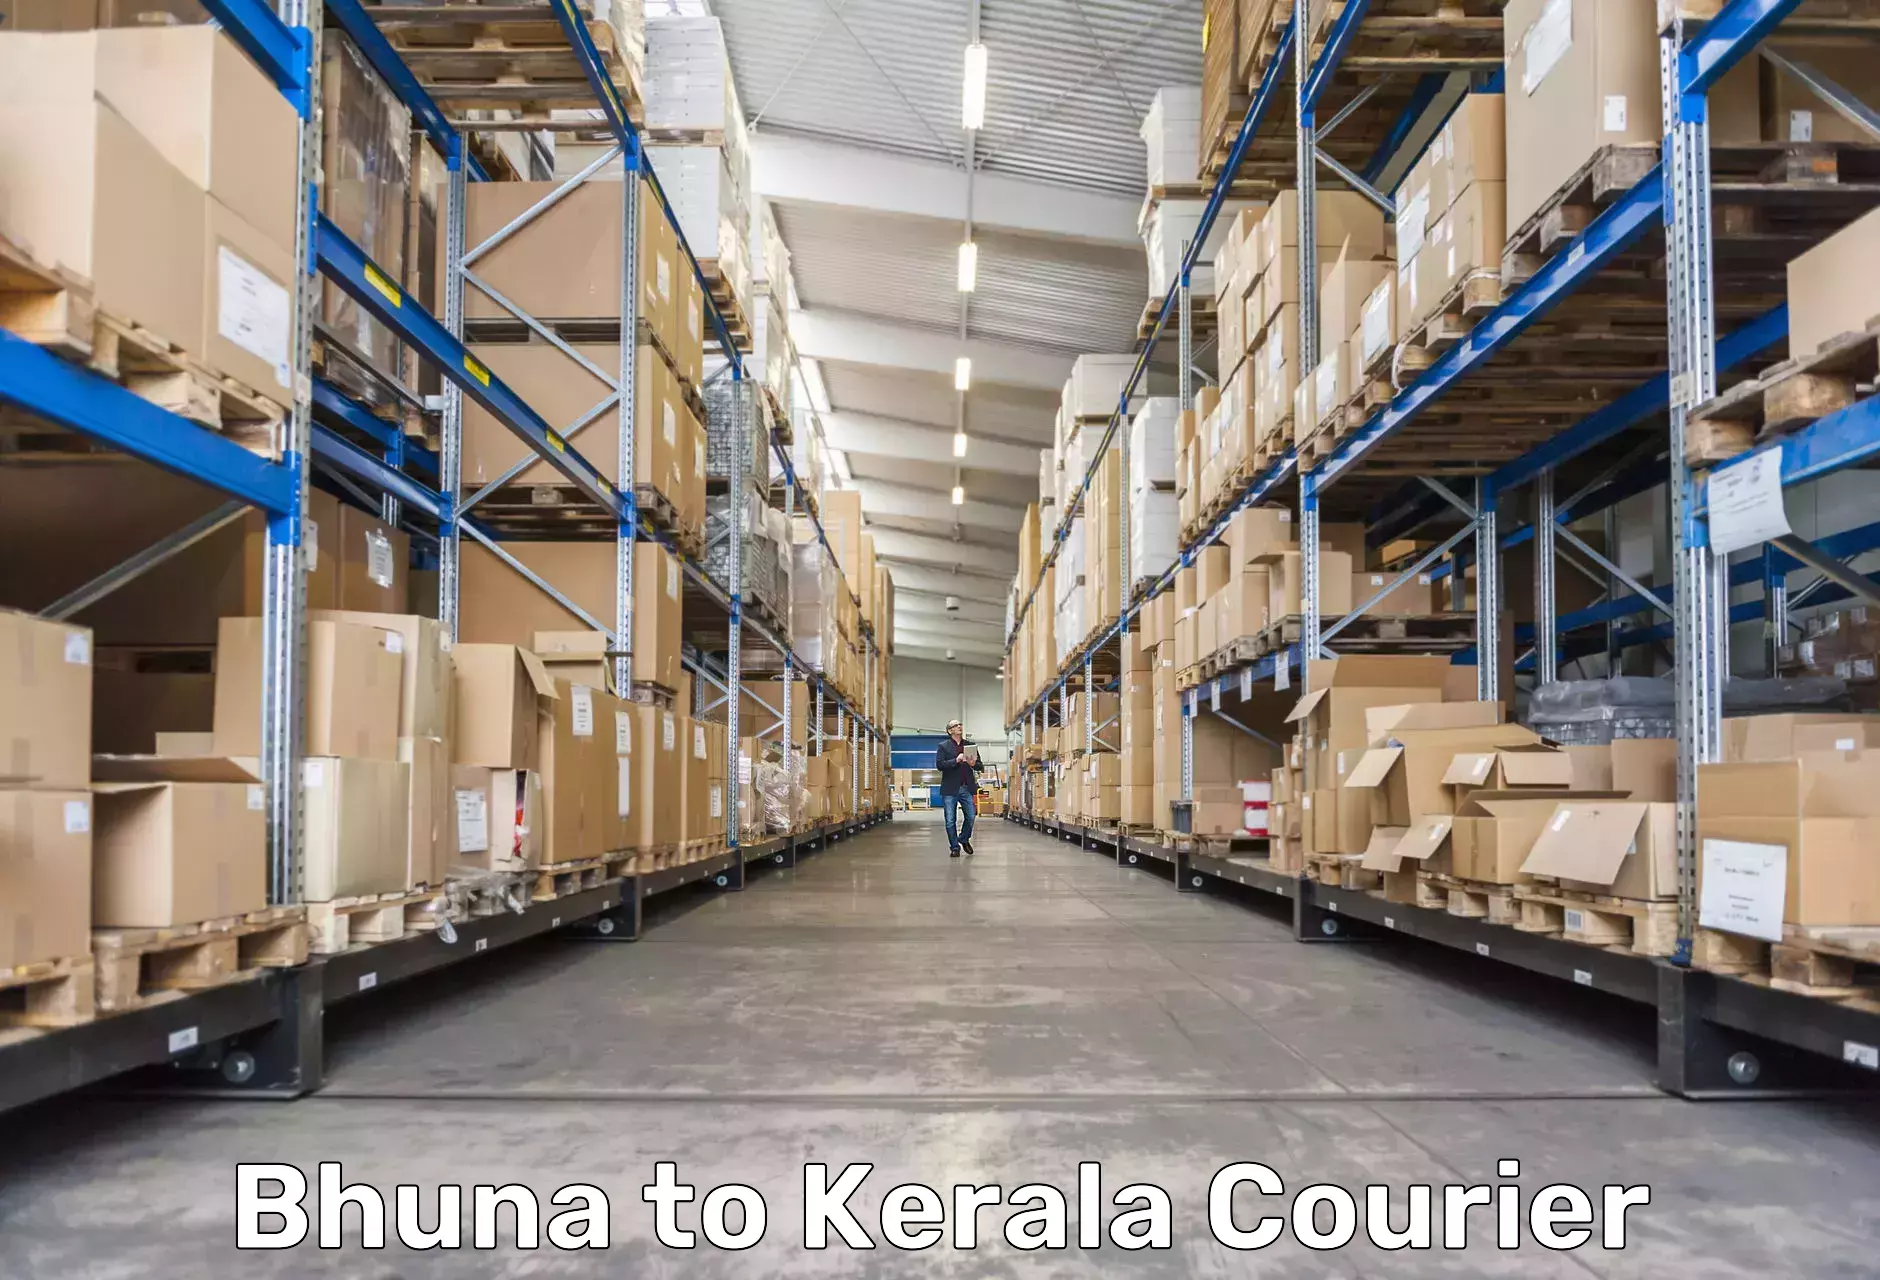 Advanced courier platforms Bhuna to Kerala